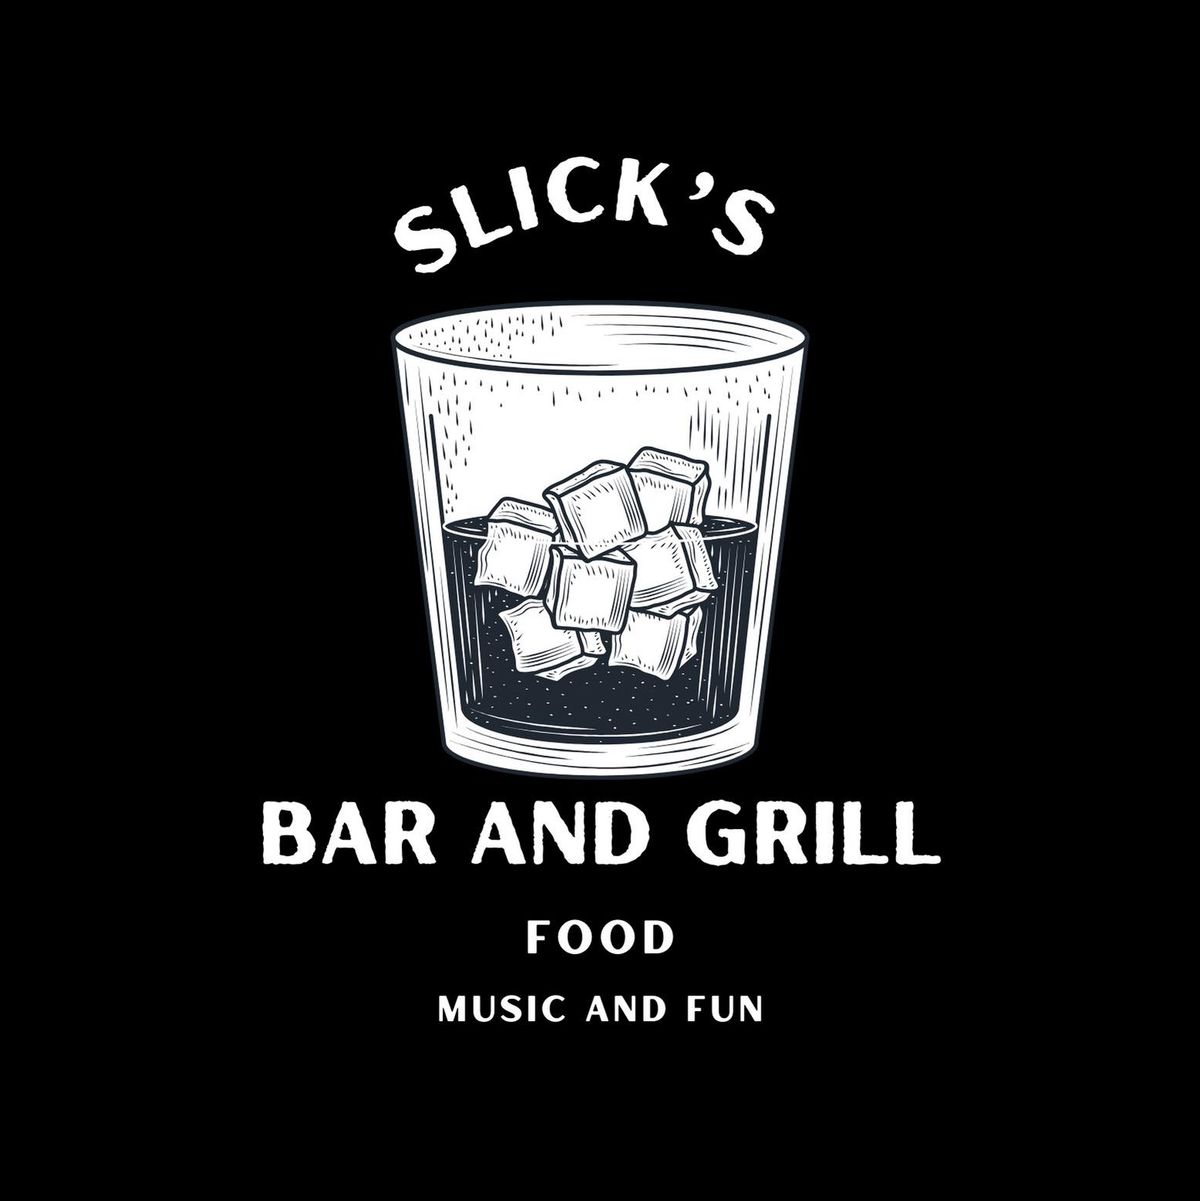 Rachel at Slick's Bar and Grill!